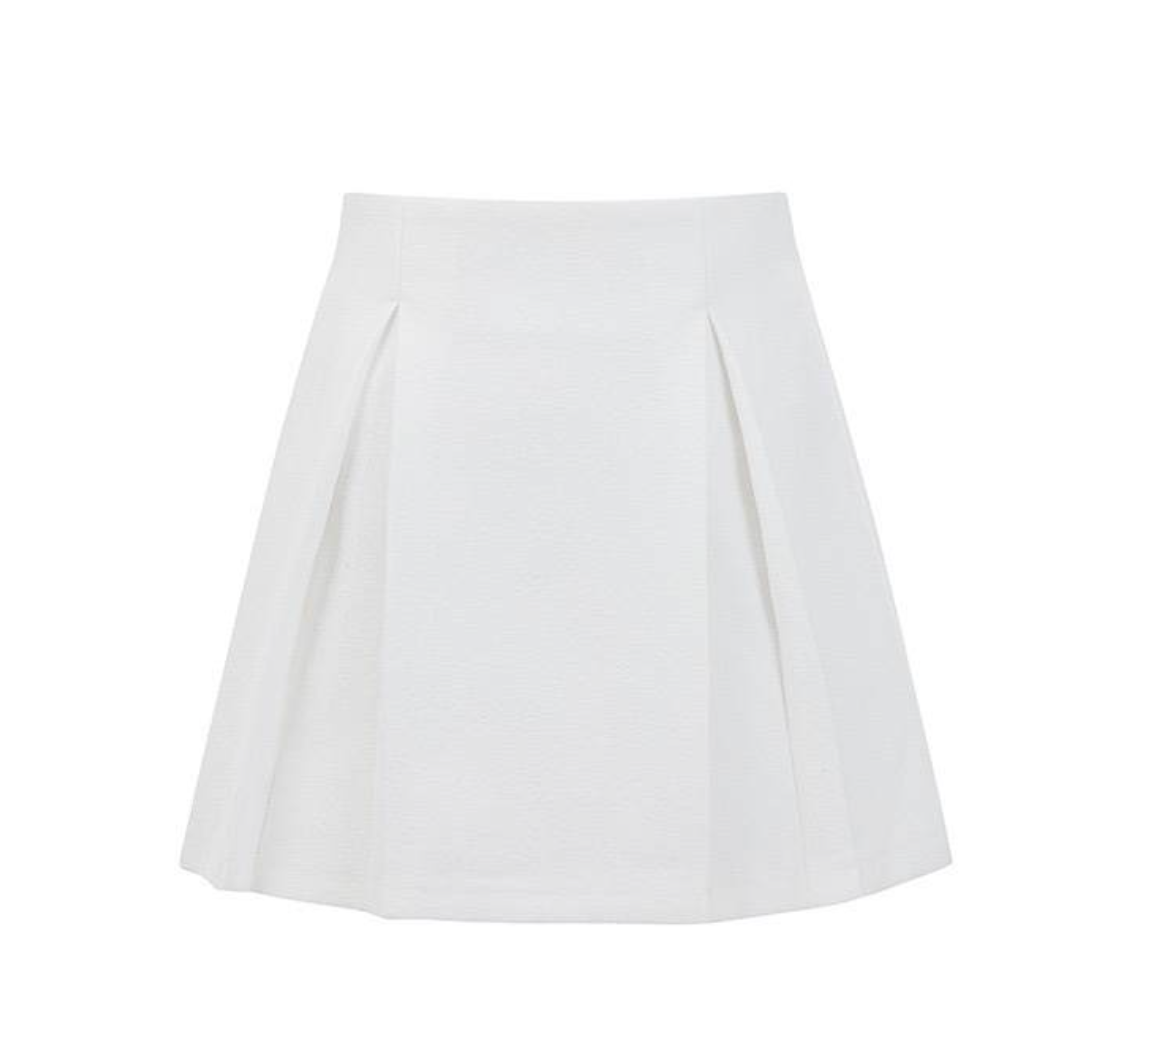 Kucho White Frill Skirt Suit